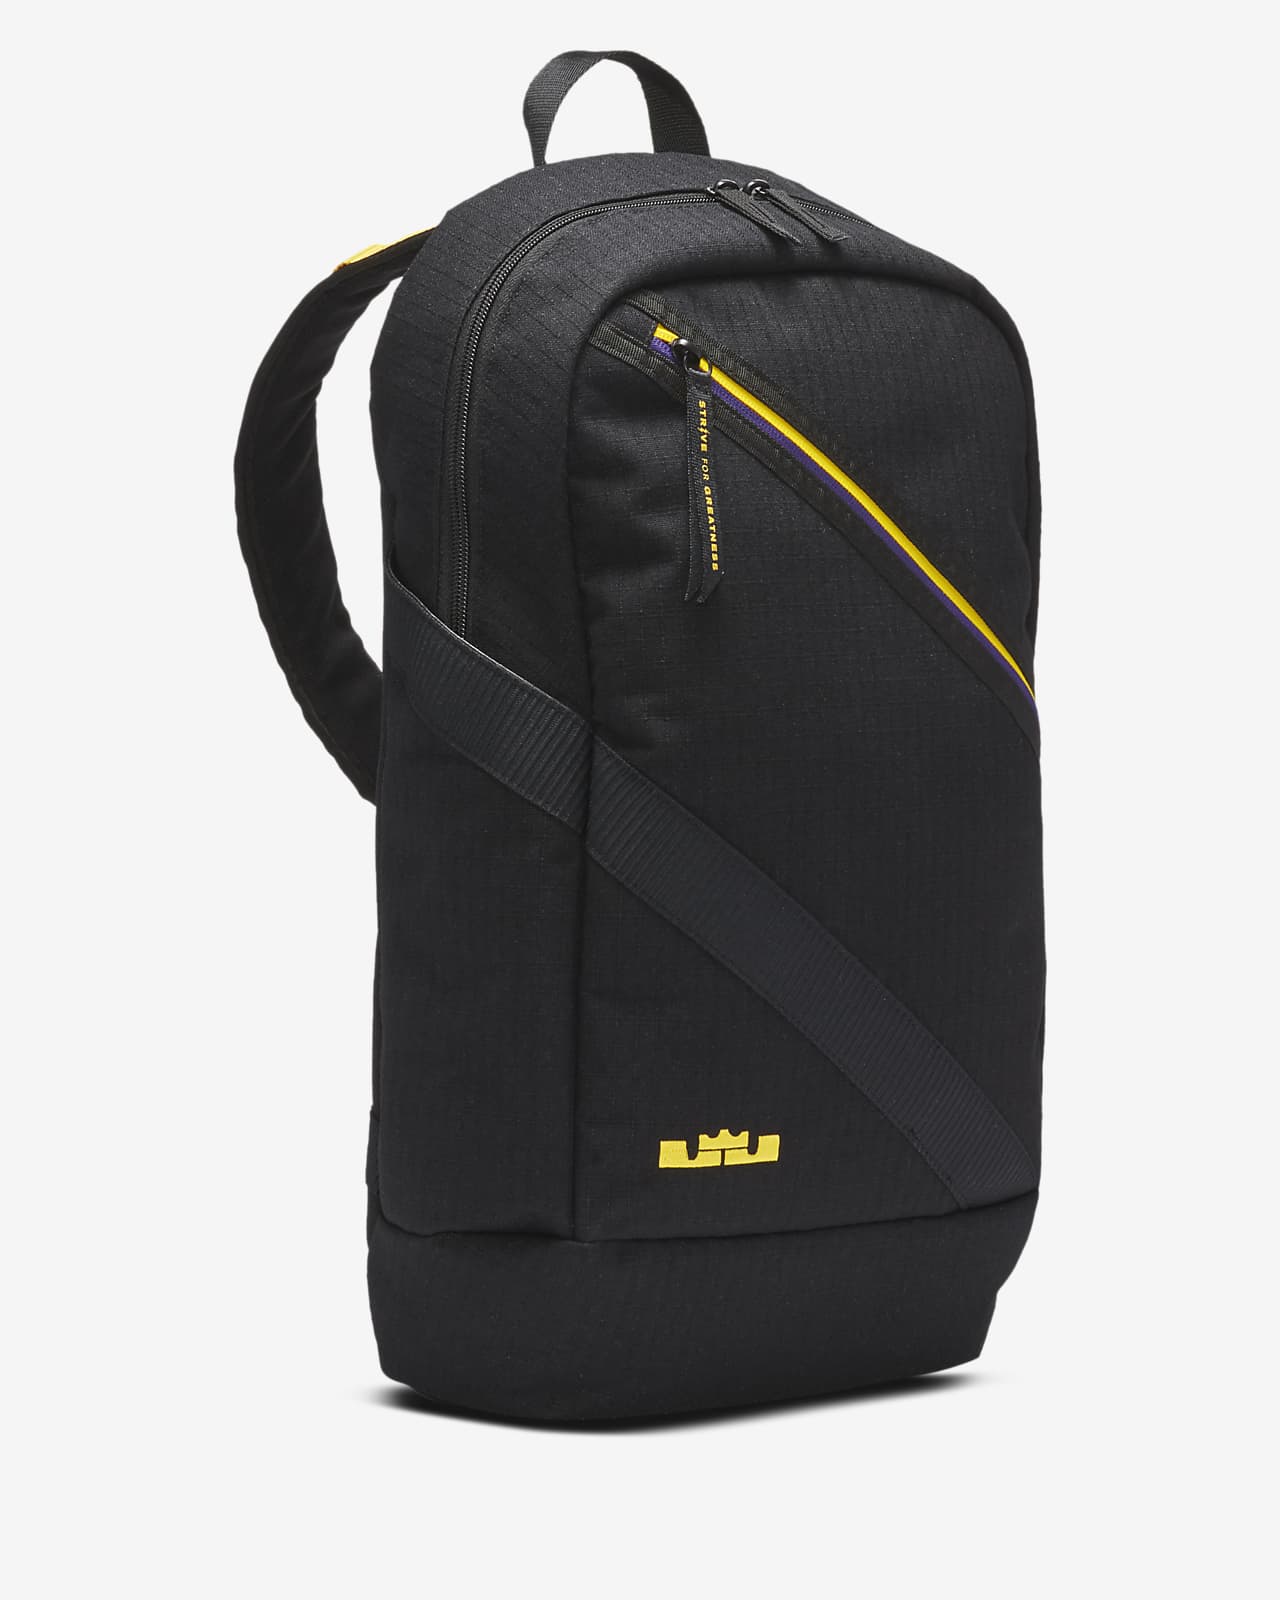 nike lebron backpack limited edition